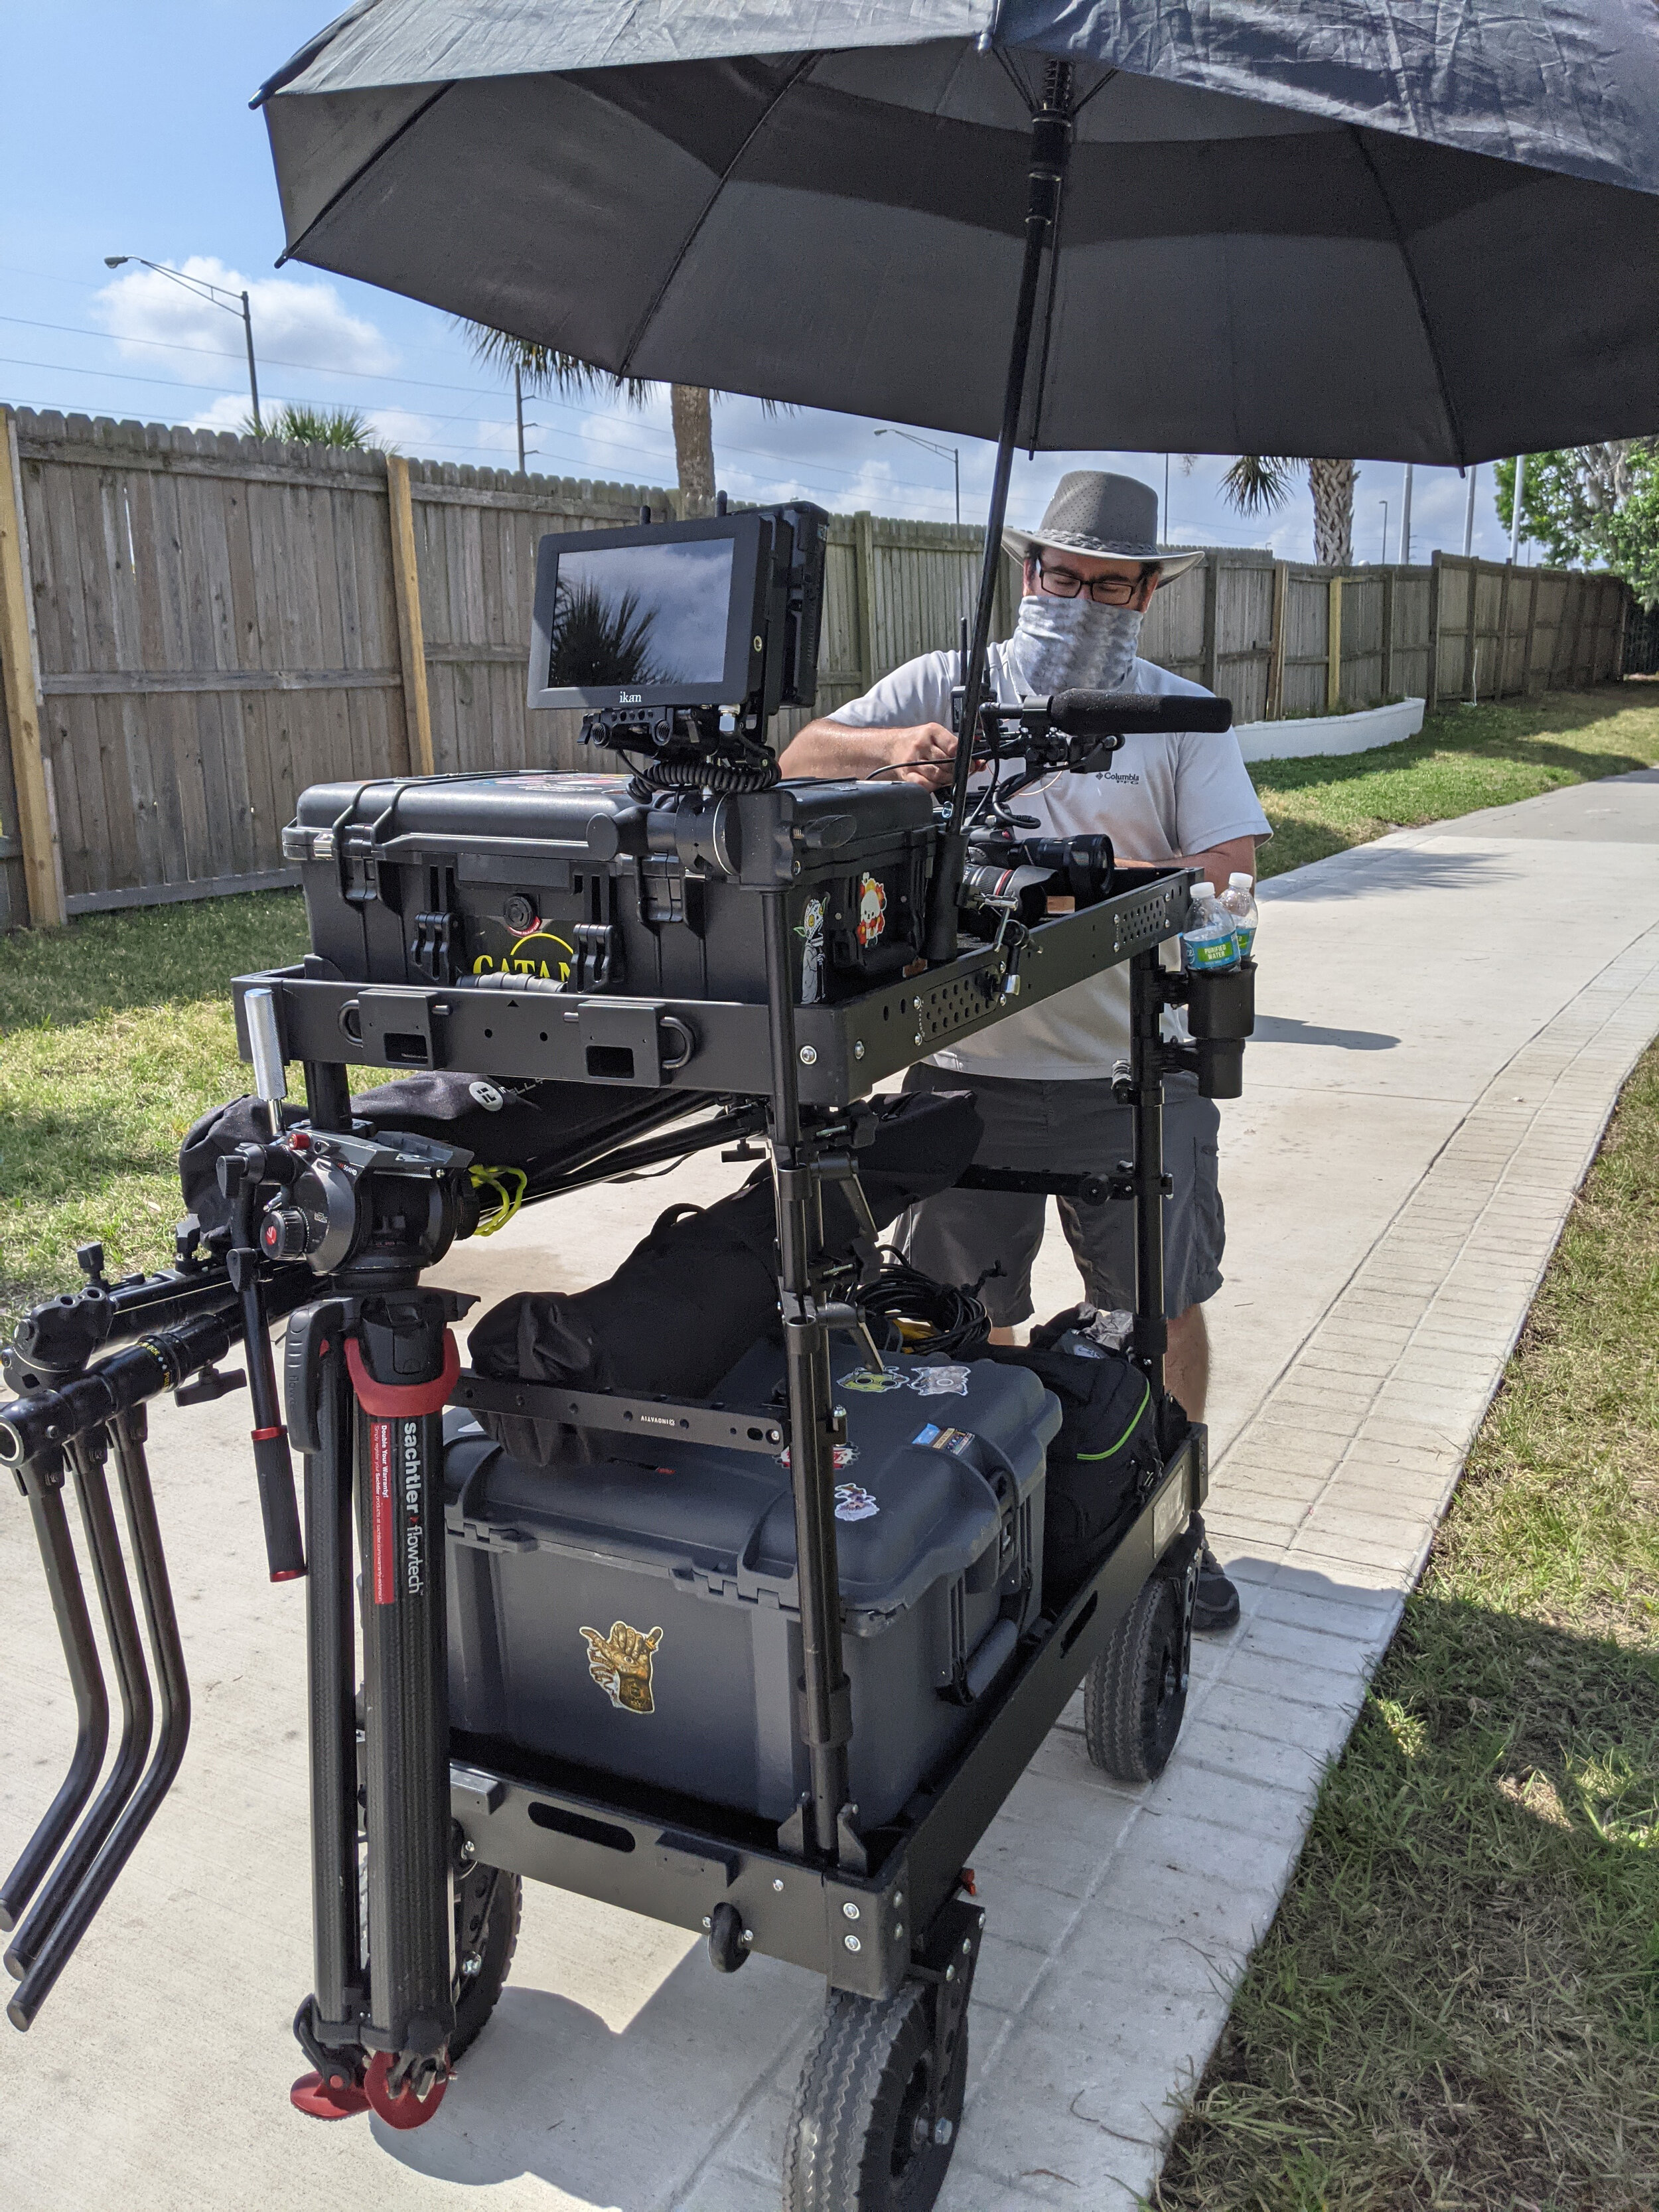 Miami Video Prodution BTS Gear Photos - Production Cart In Action.jpg